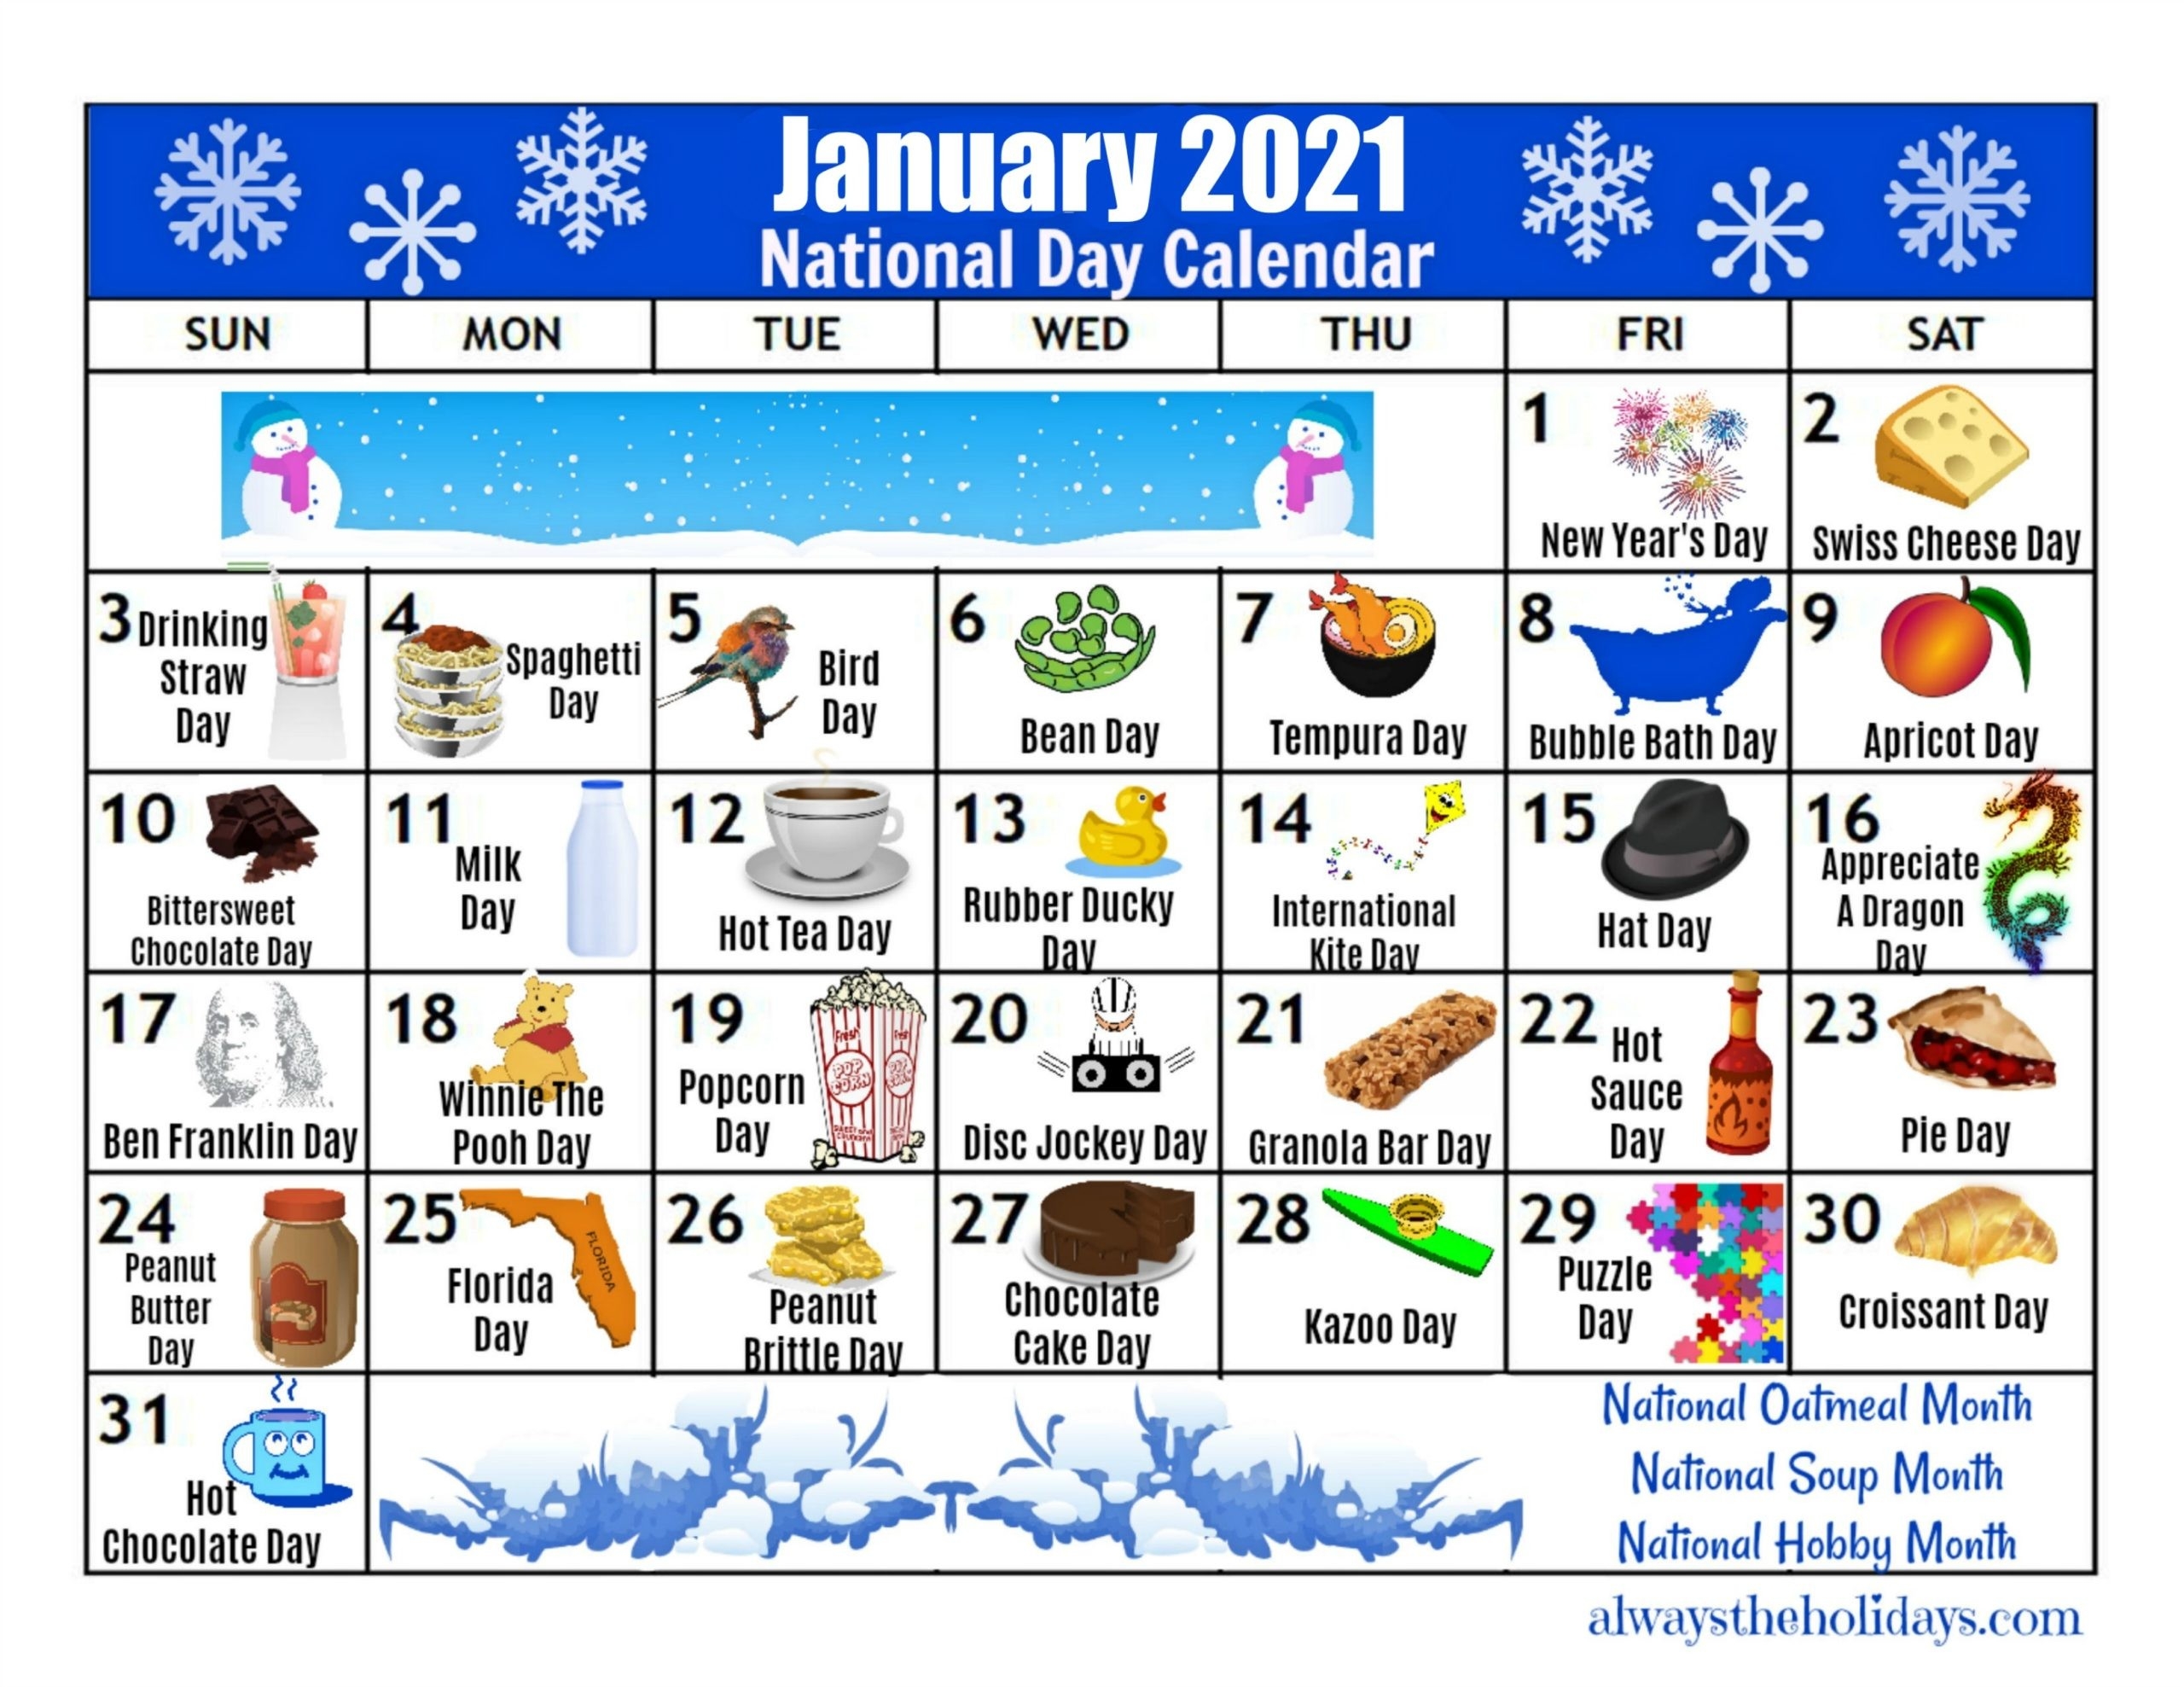 January Printable National Day Calendar 2021 - Free Planning-Free November Holiday National Food Holiday Printout 2021